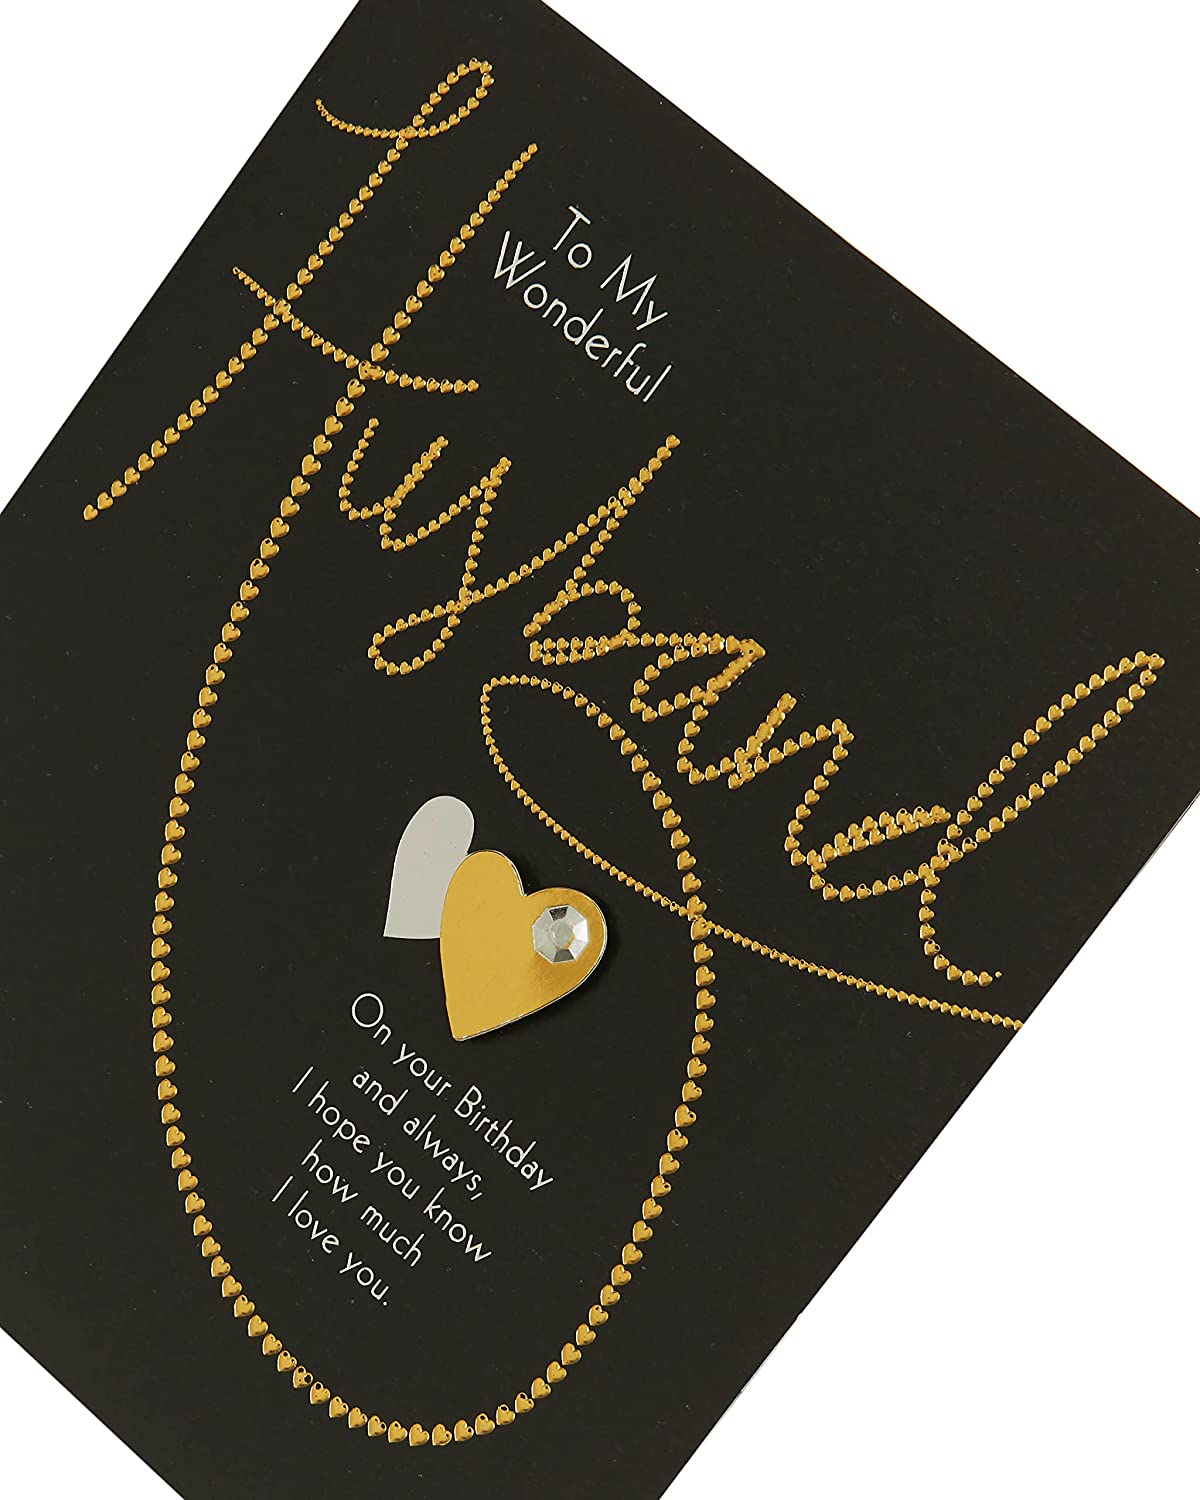 Husband Golden Heart Birthday Card with Sentimental Verse